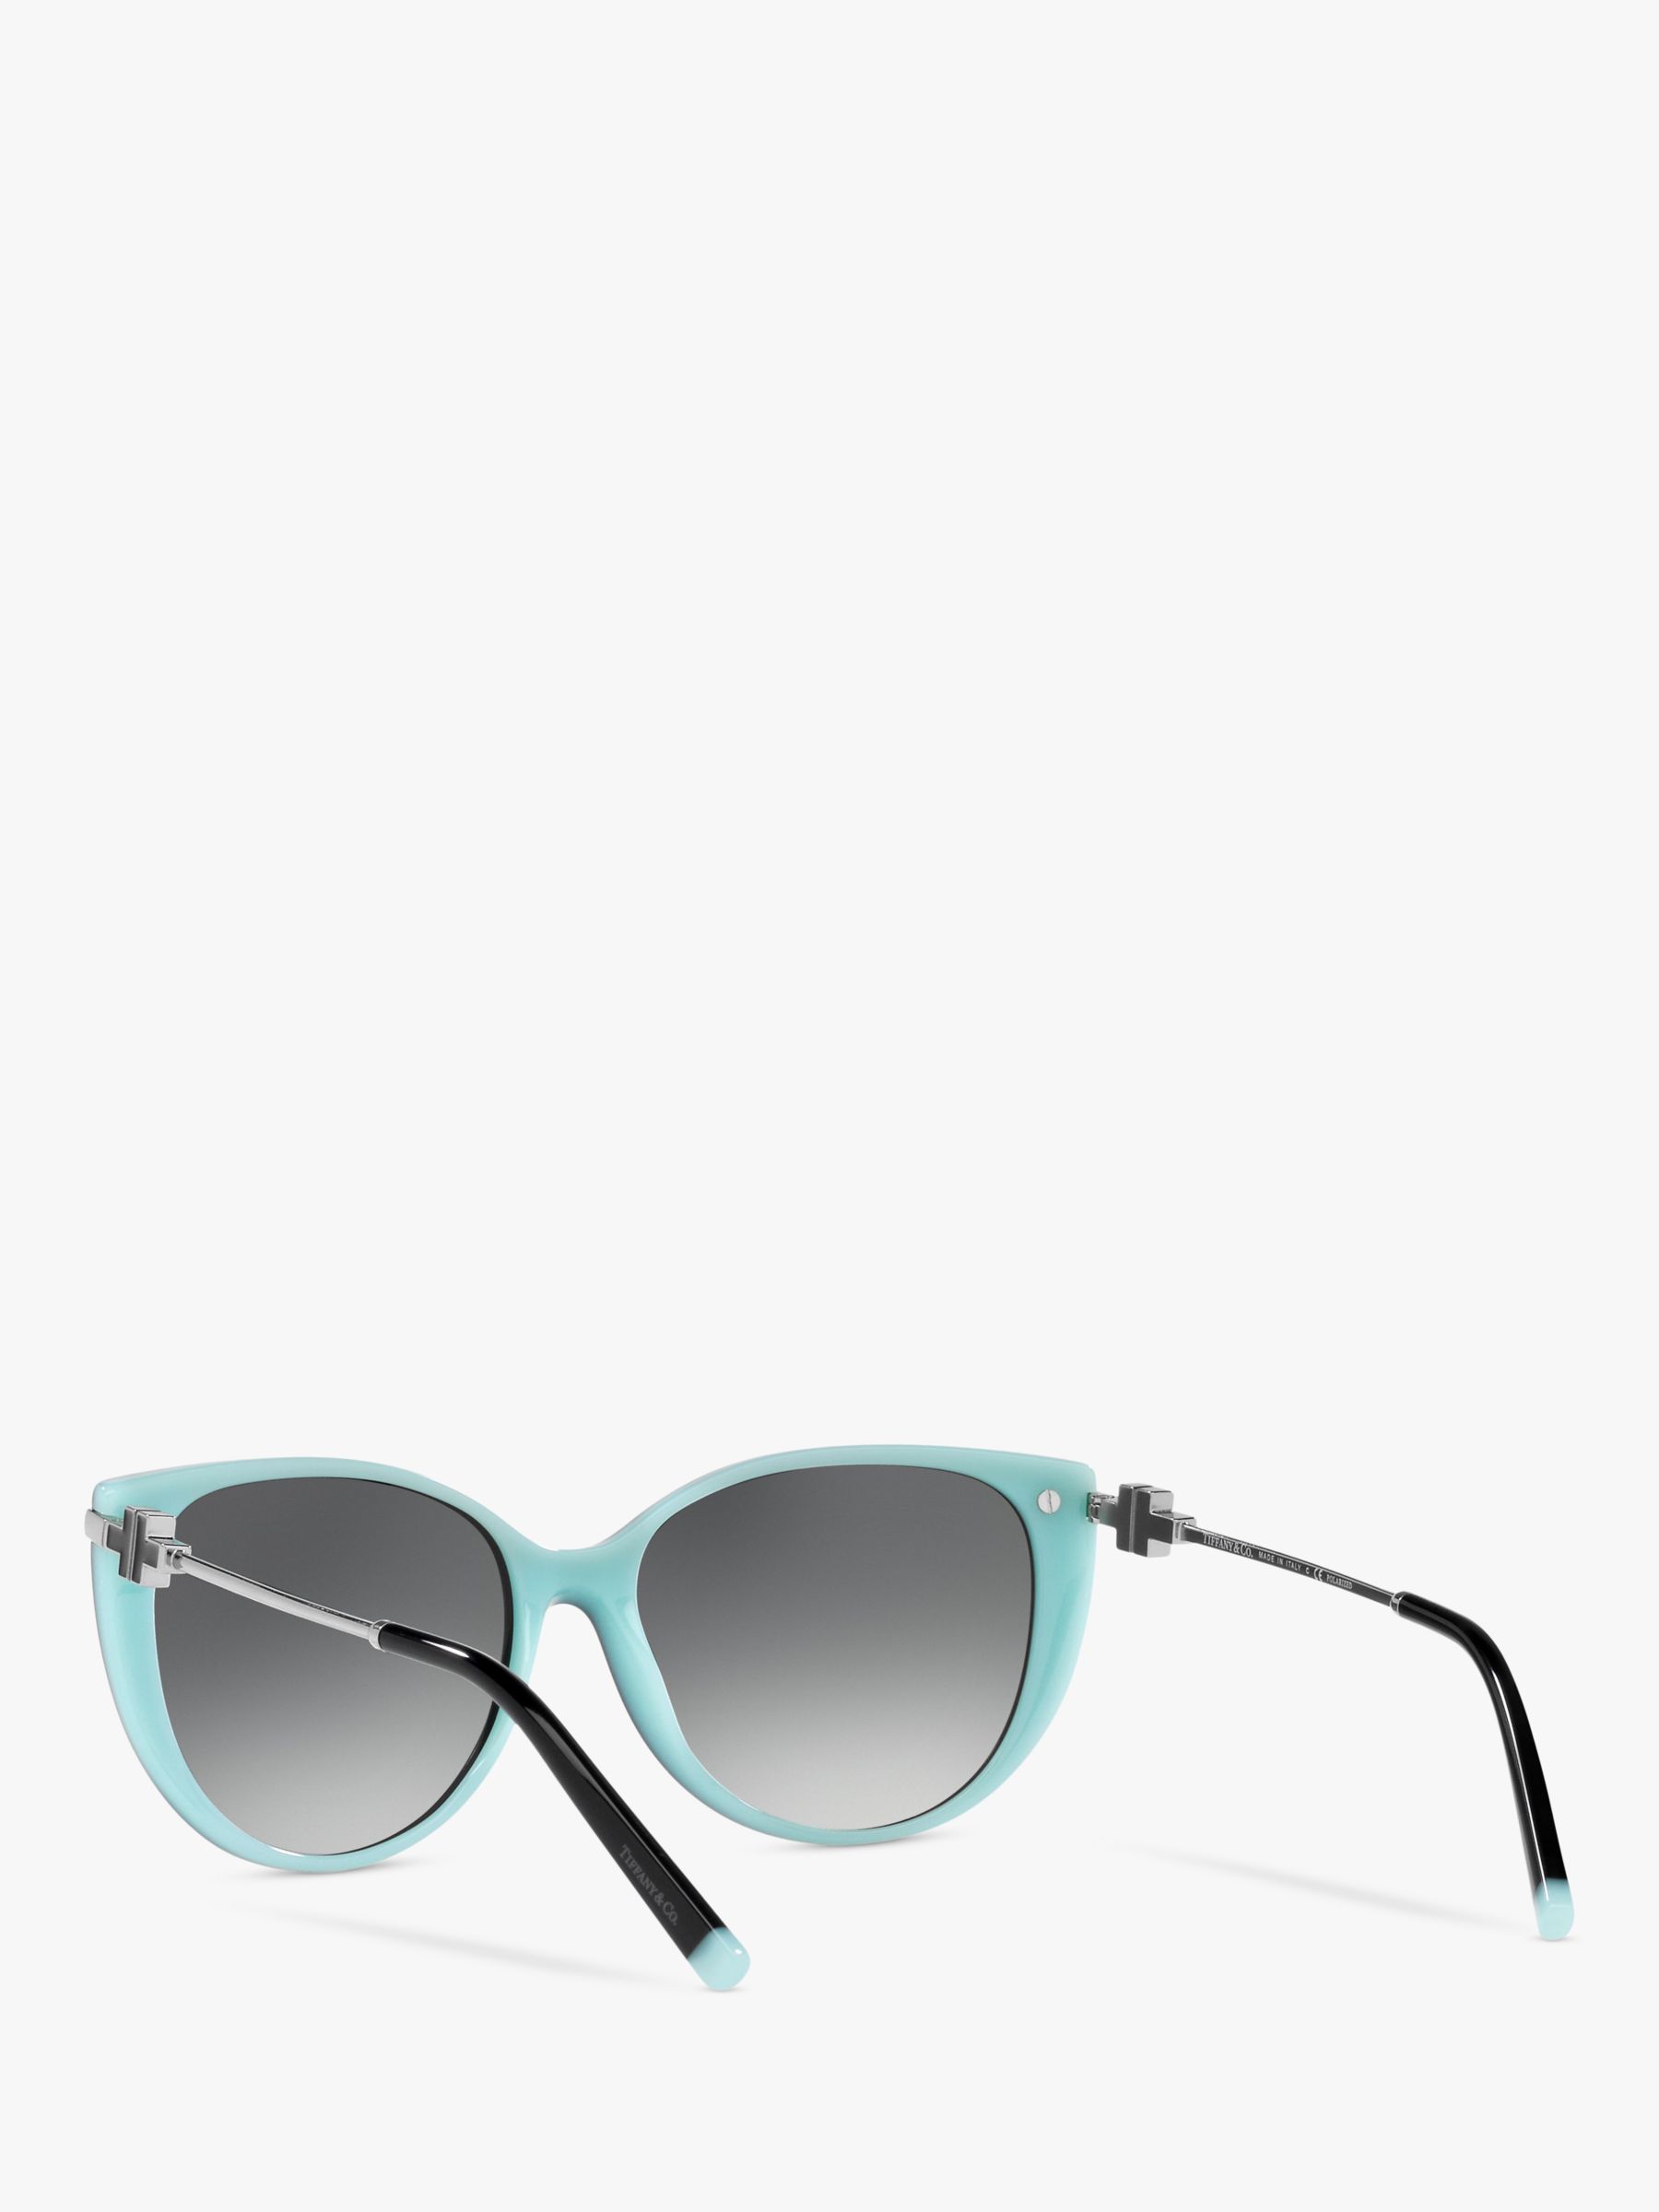 Tiffany & Co TF4178 Women's Polarised Cat's Eye Sunglasses, Black/Tiffany Blue